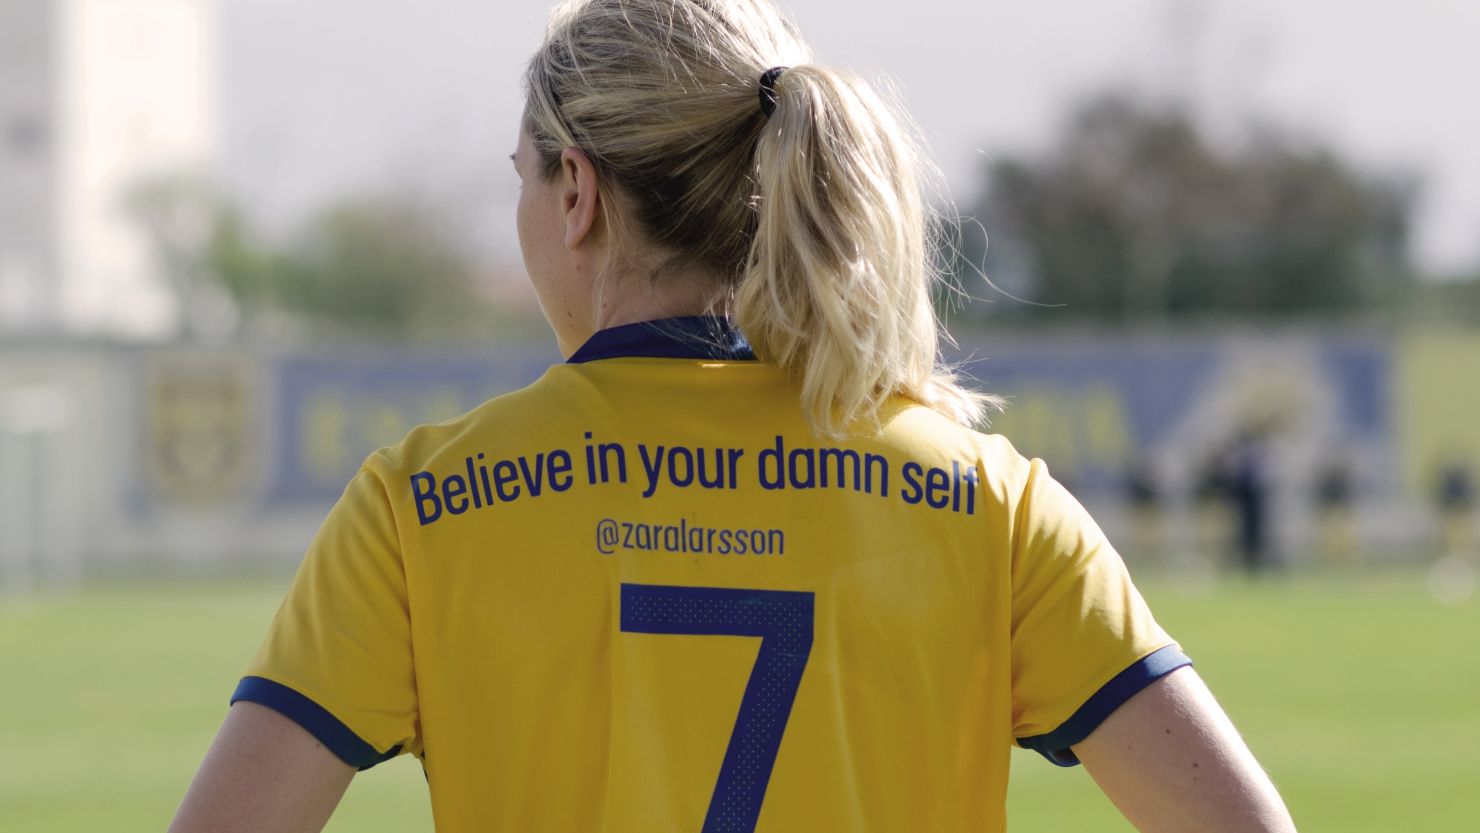  Midfielder Lisa Dahlkvist wears a shirt emblazoned with a tweet by singer Zara Larsson.